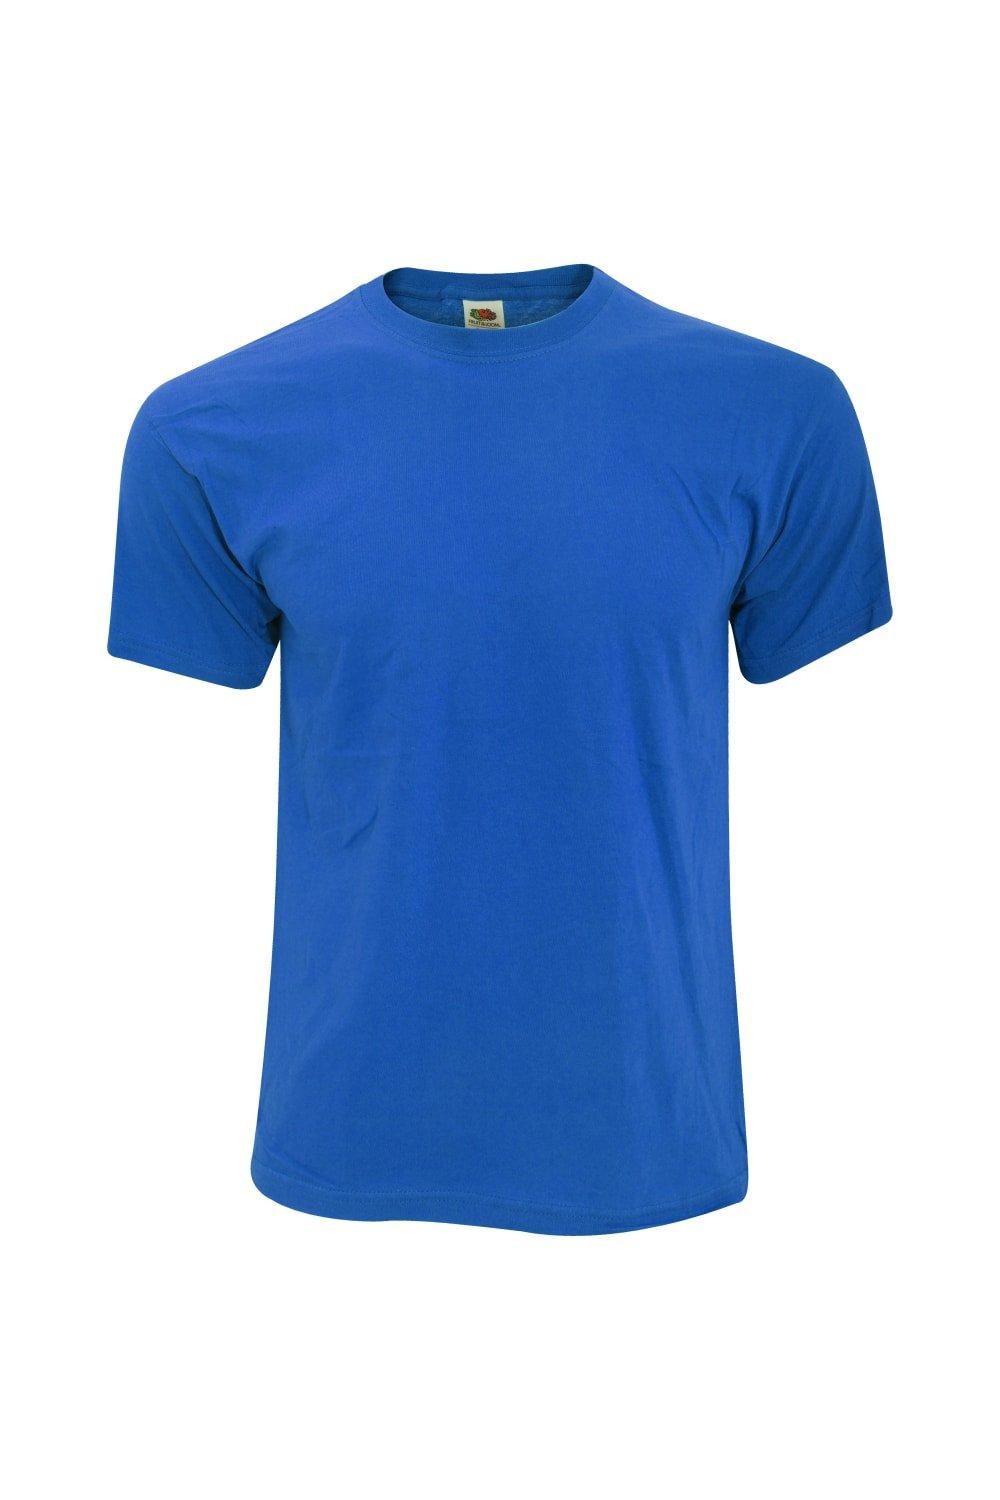 Оригинальная полноразмерная футболка Screen Stars с короткими рукавами Fruit of the Loom, синий